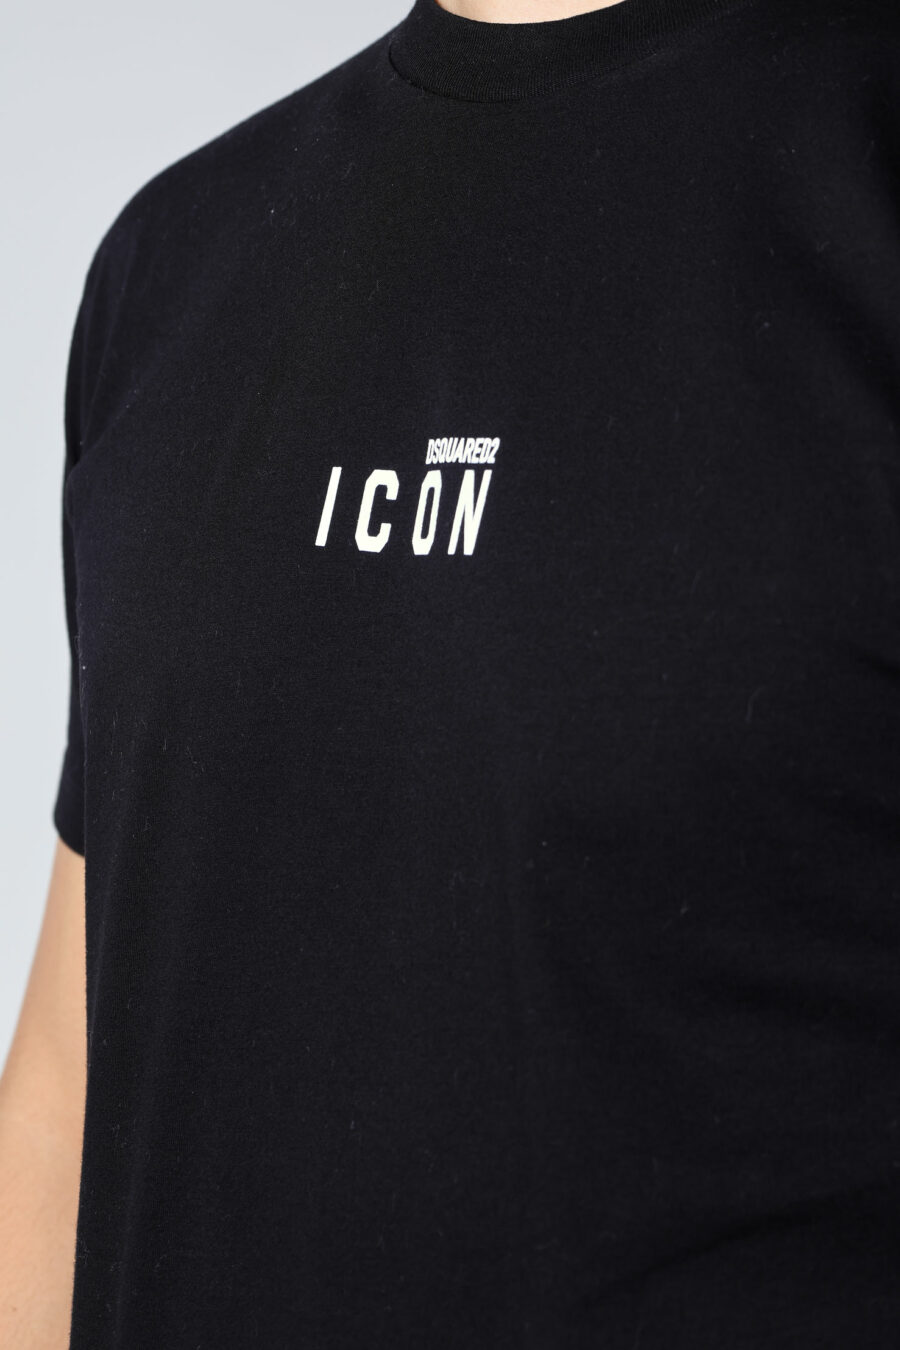 Camiseta negra con minilogo "icon" - Untitled Catalog 05663